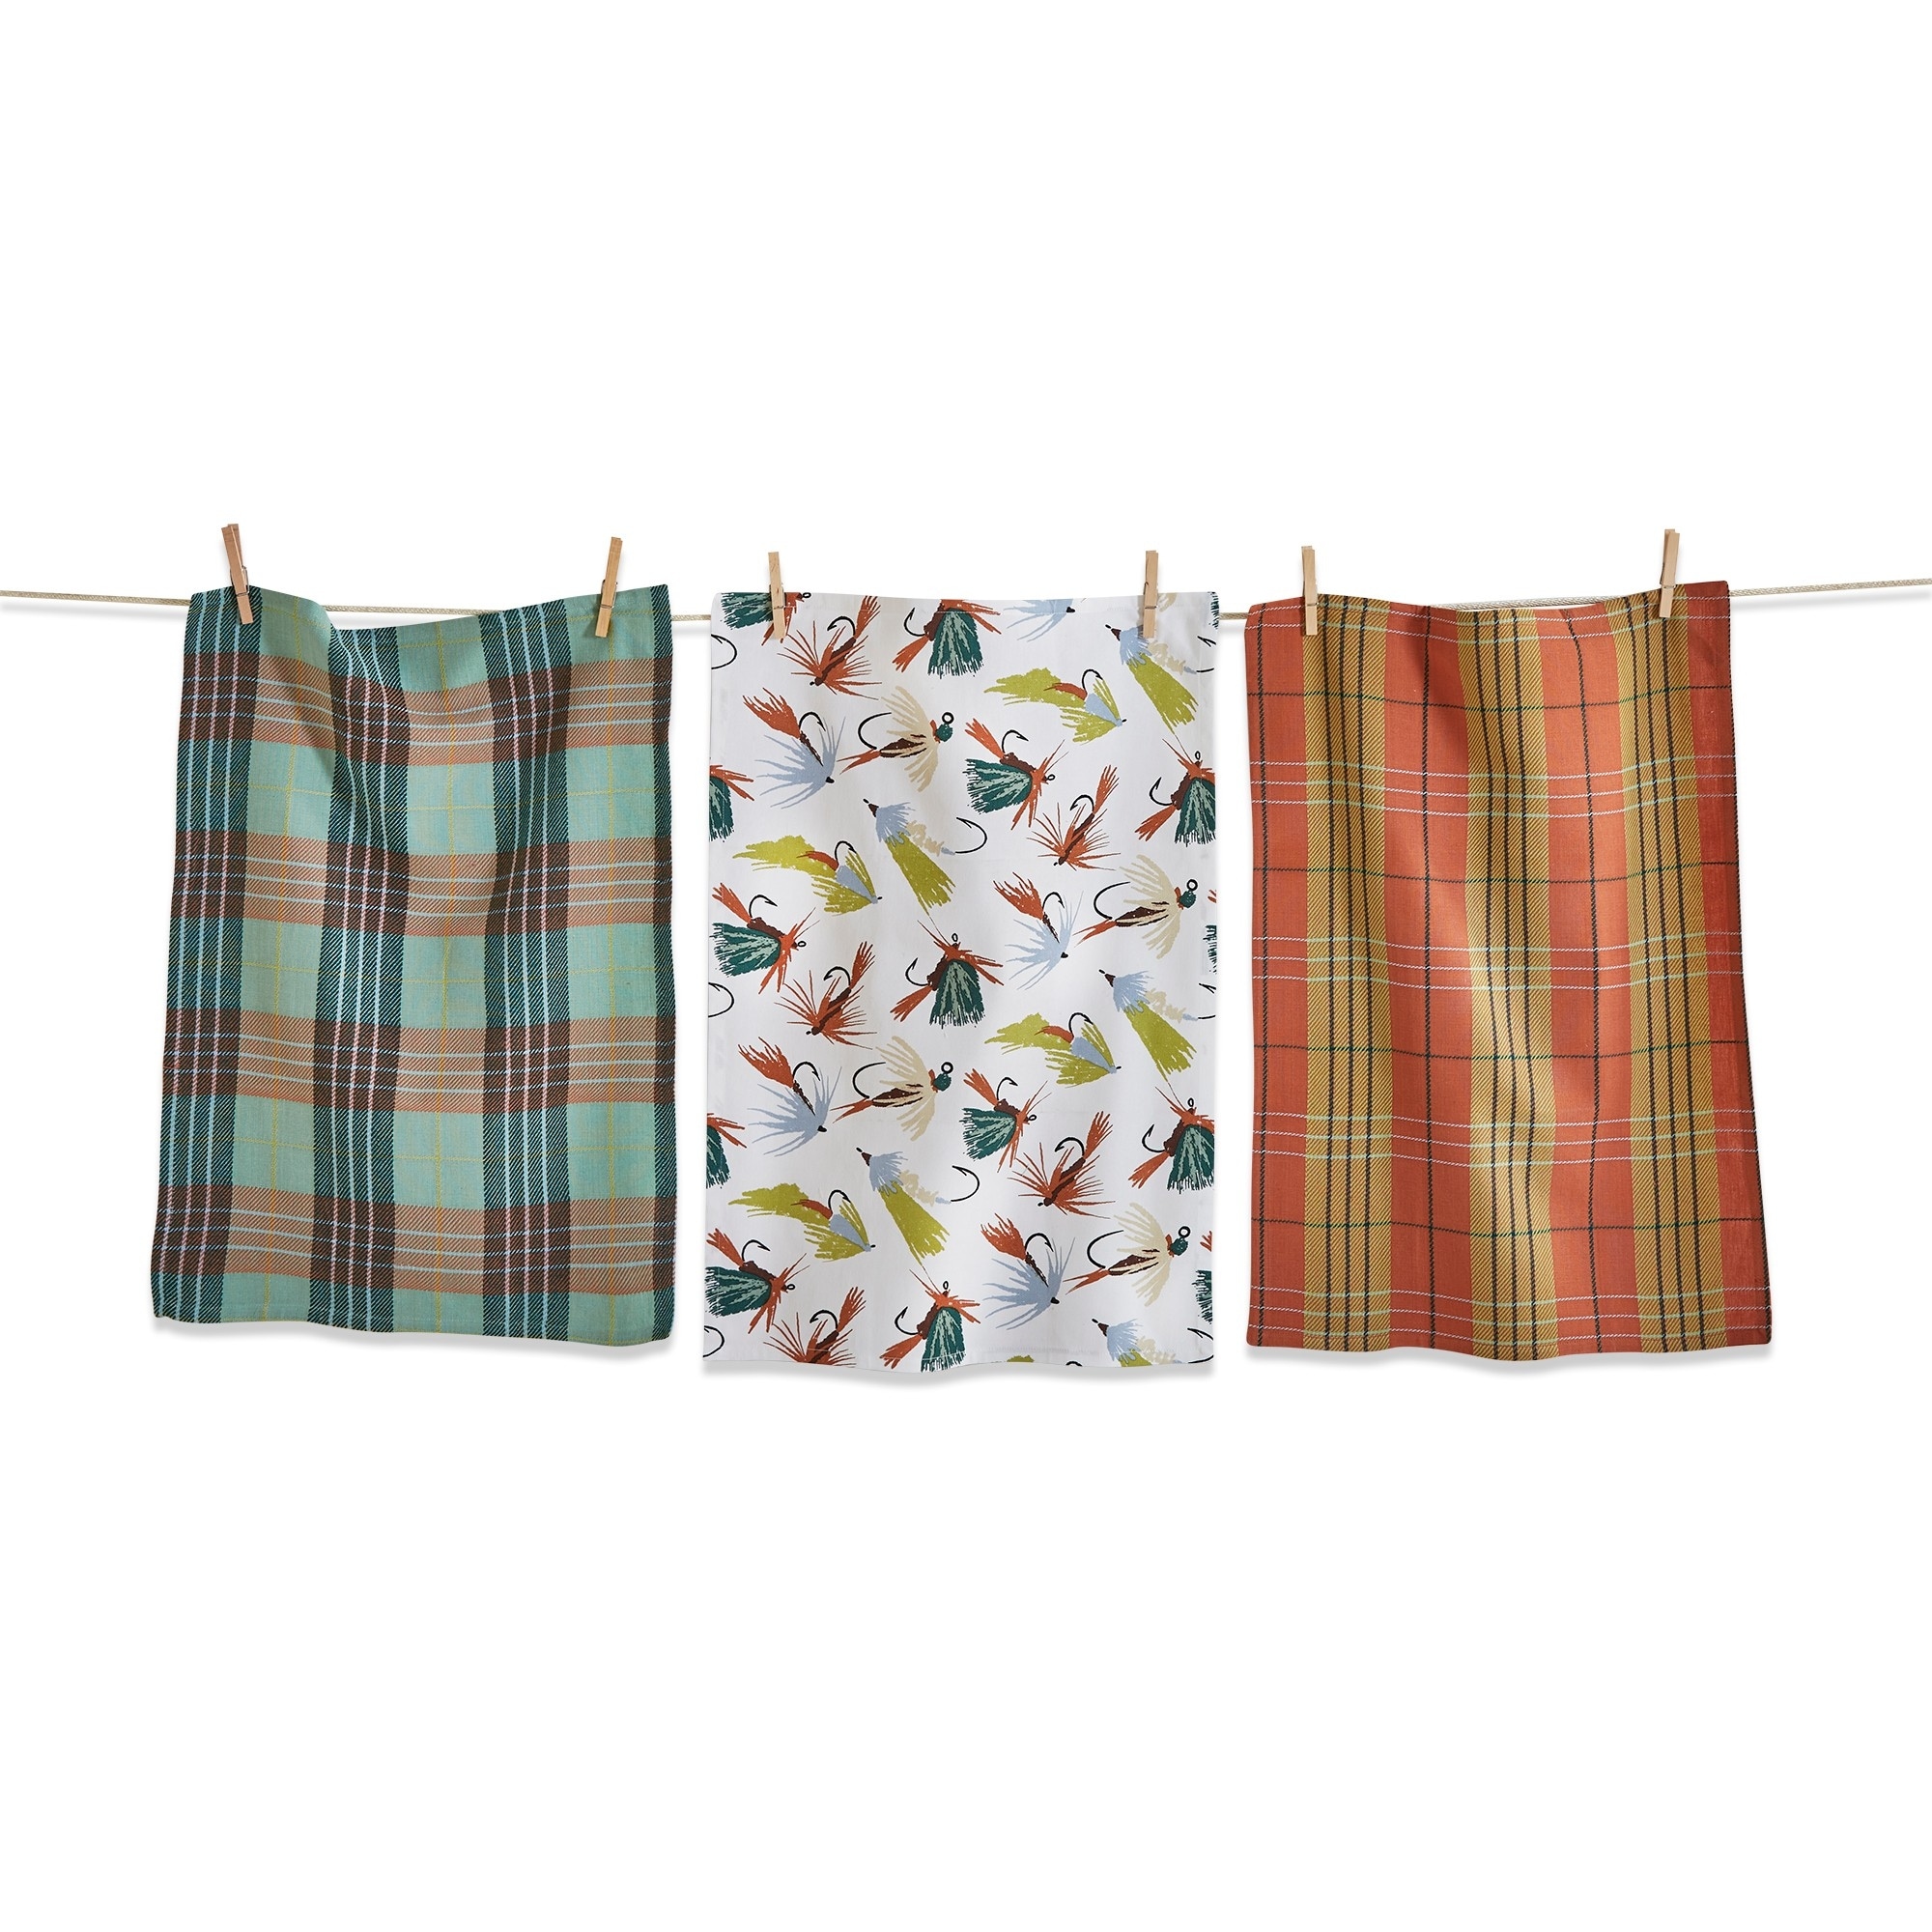 Set of 3 Fishing Flies Print with Green Plaids Cotton Kitchen Dishtowels  26L x 18W in. - Bed Bath & Beyond - 40216041